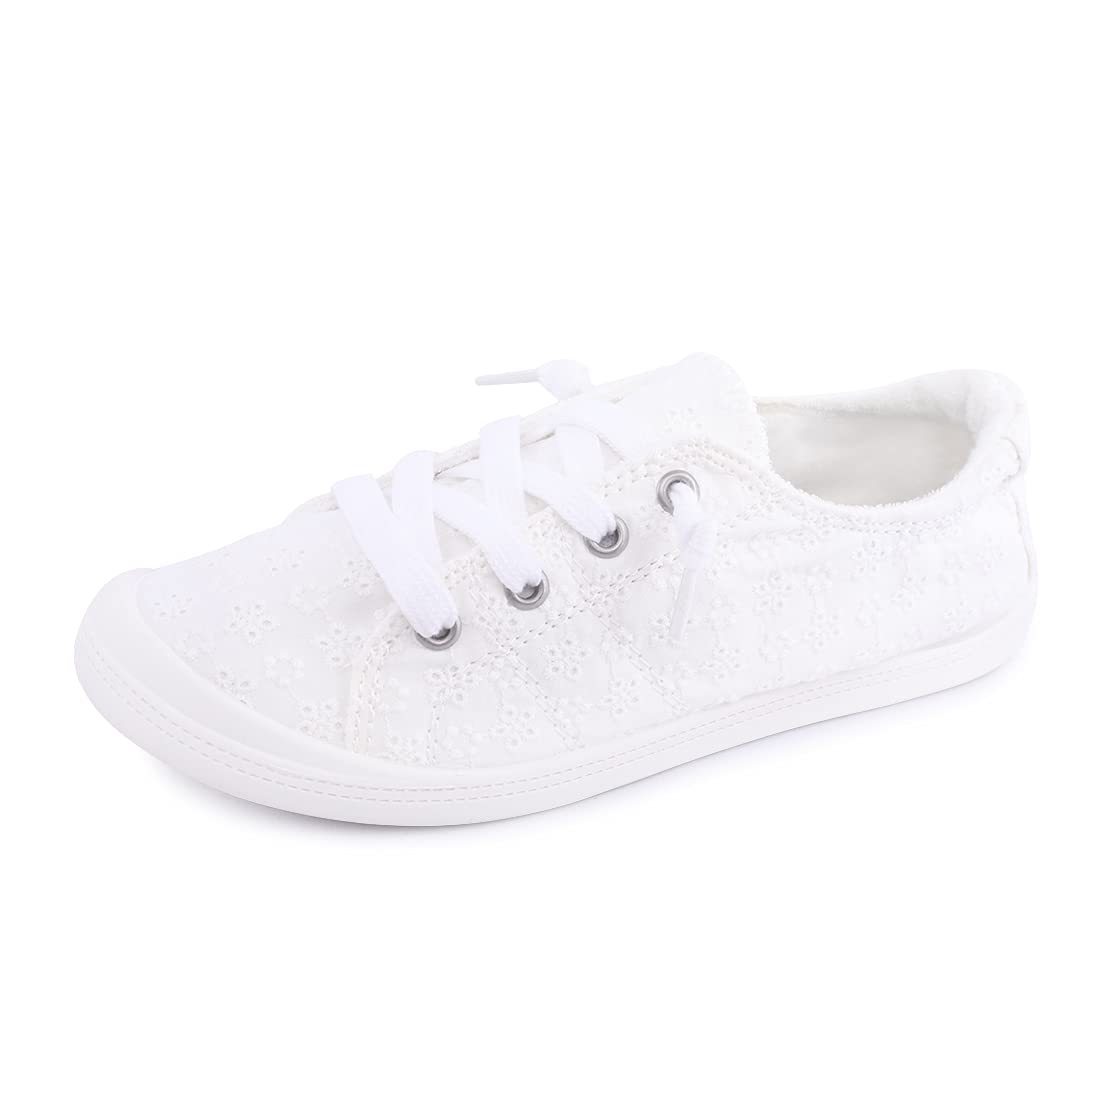 BENEKER Womens Slip On Canvas Sneaker Low Top Casual Walking Shoes Classic Comfort Flat Fashion Sneakers (White Dot 08)